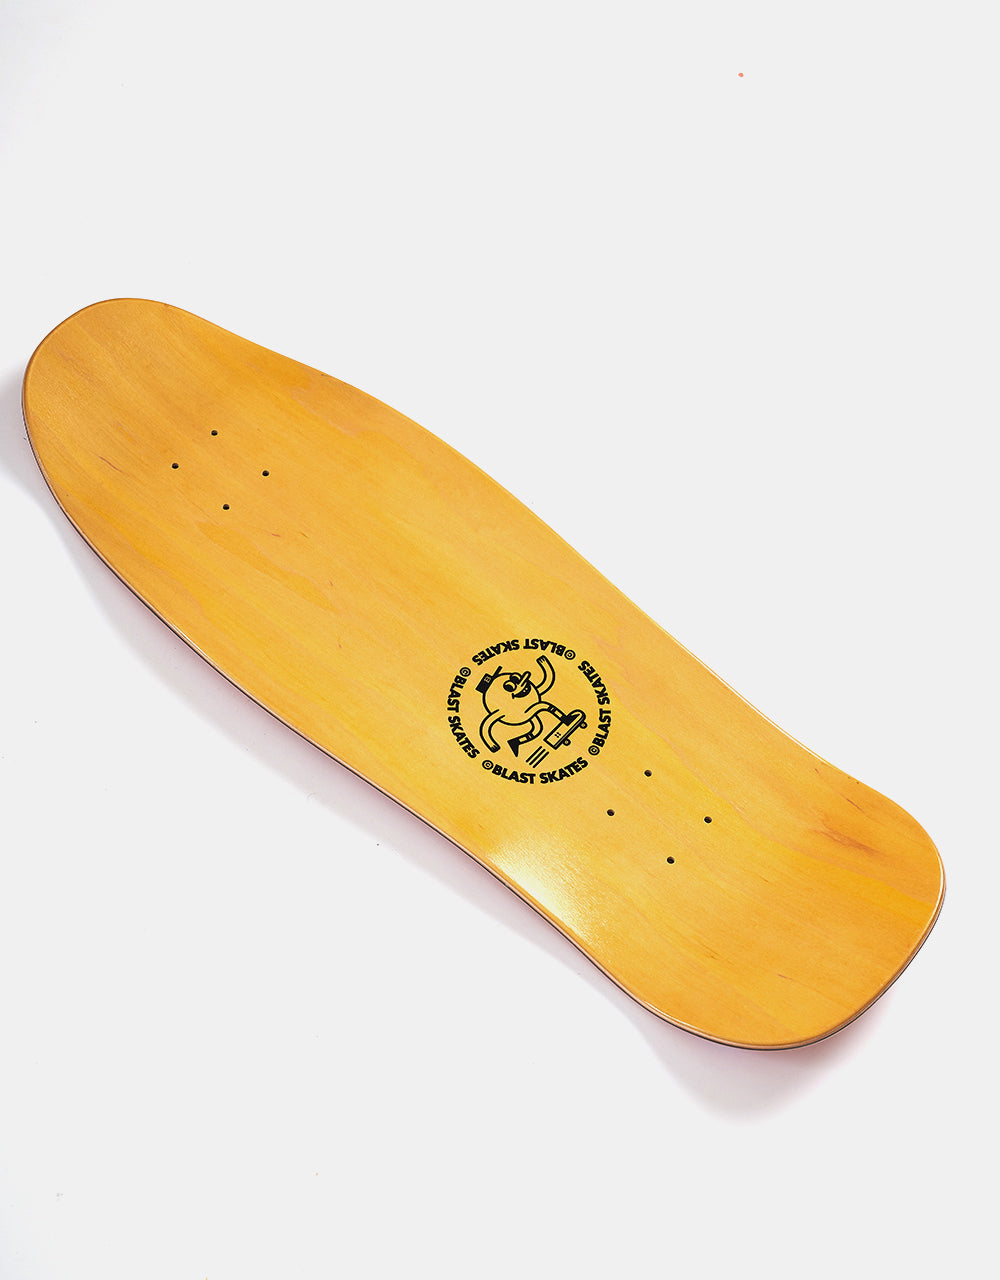 Blast Skates Curb Club 'Custom Shape' Skateboard Deck - 10"